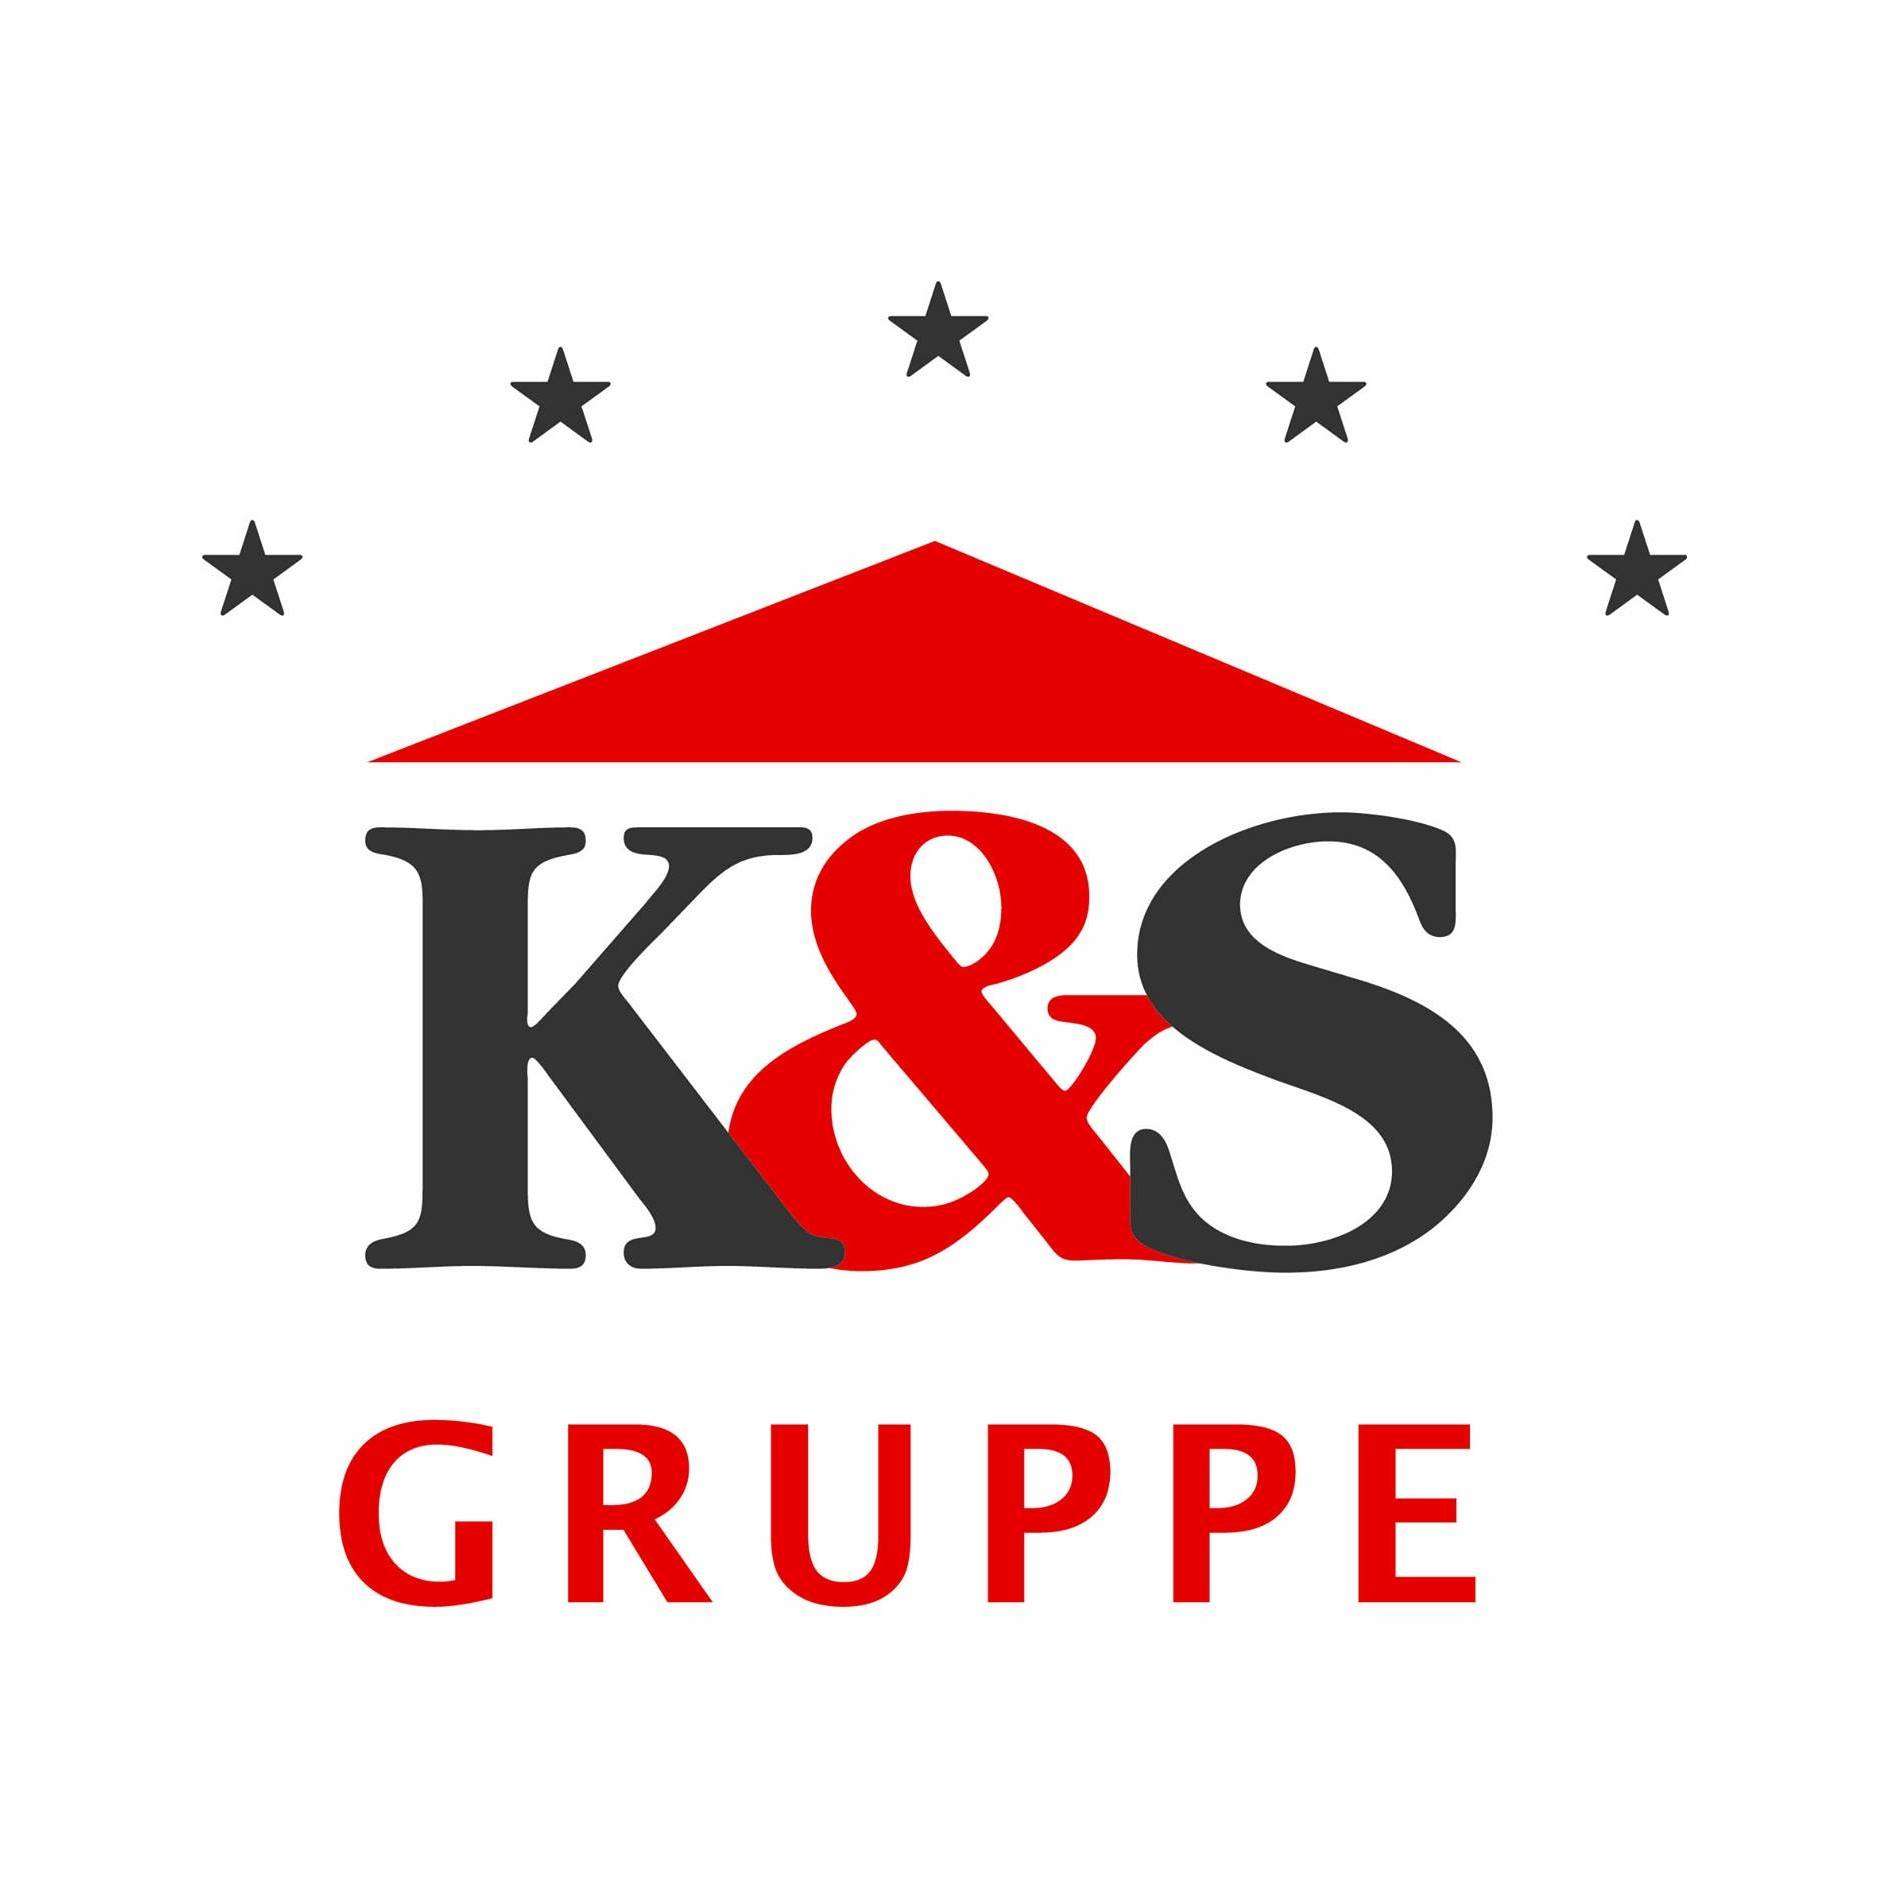 K&S group - Crunchbase Company Profile & Funding